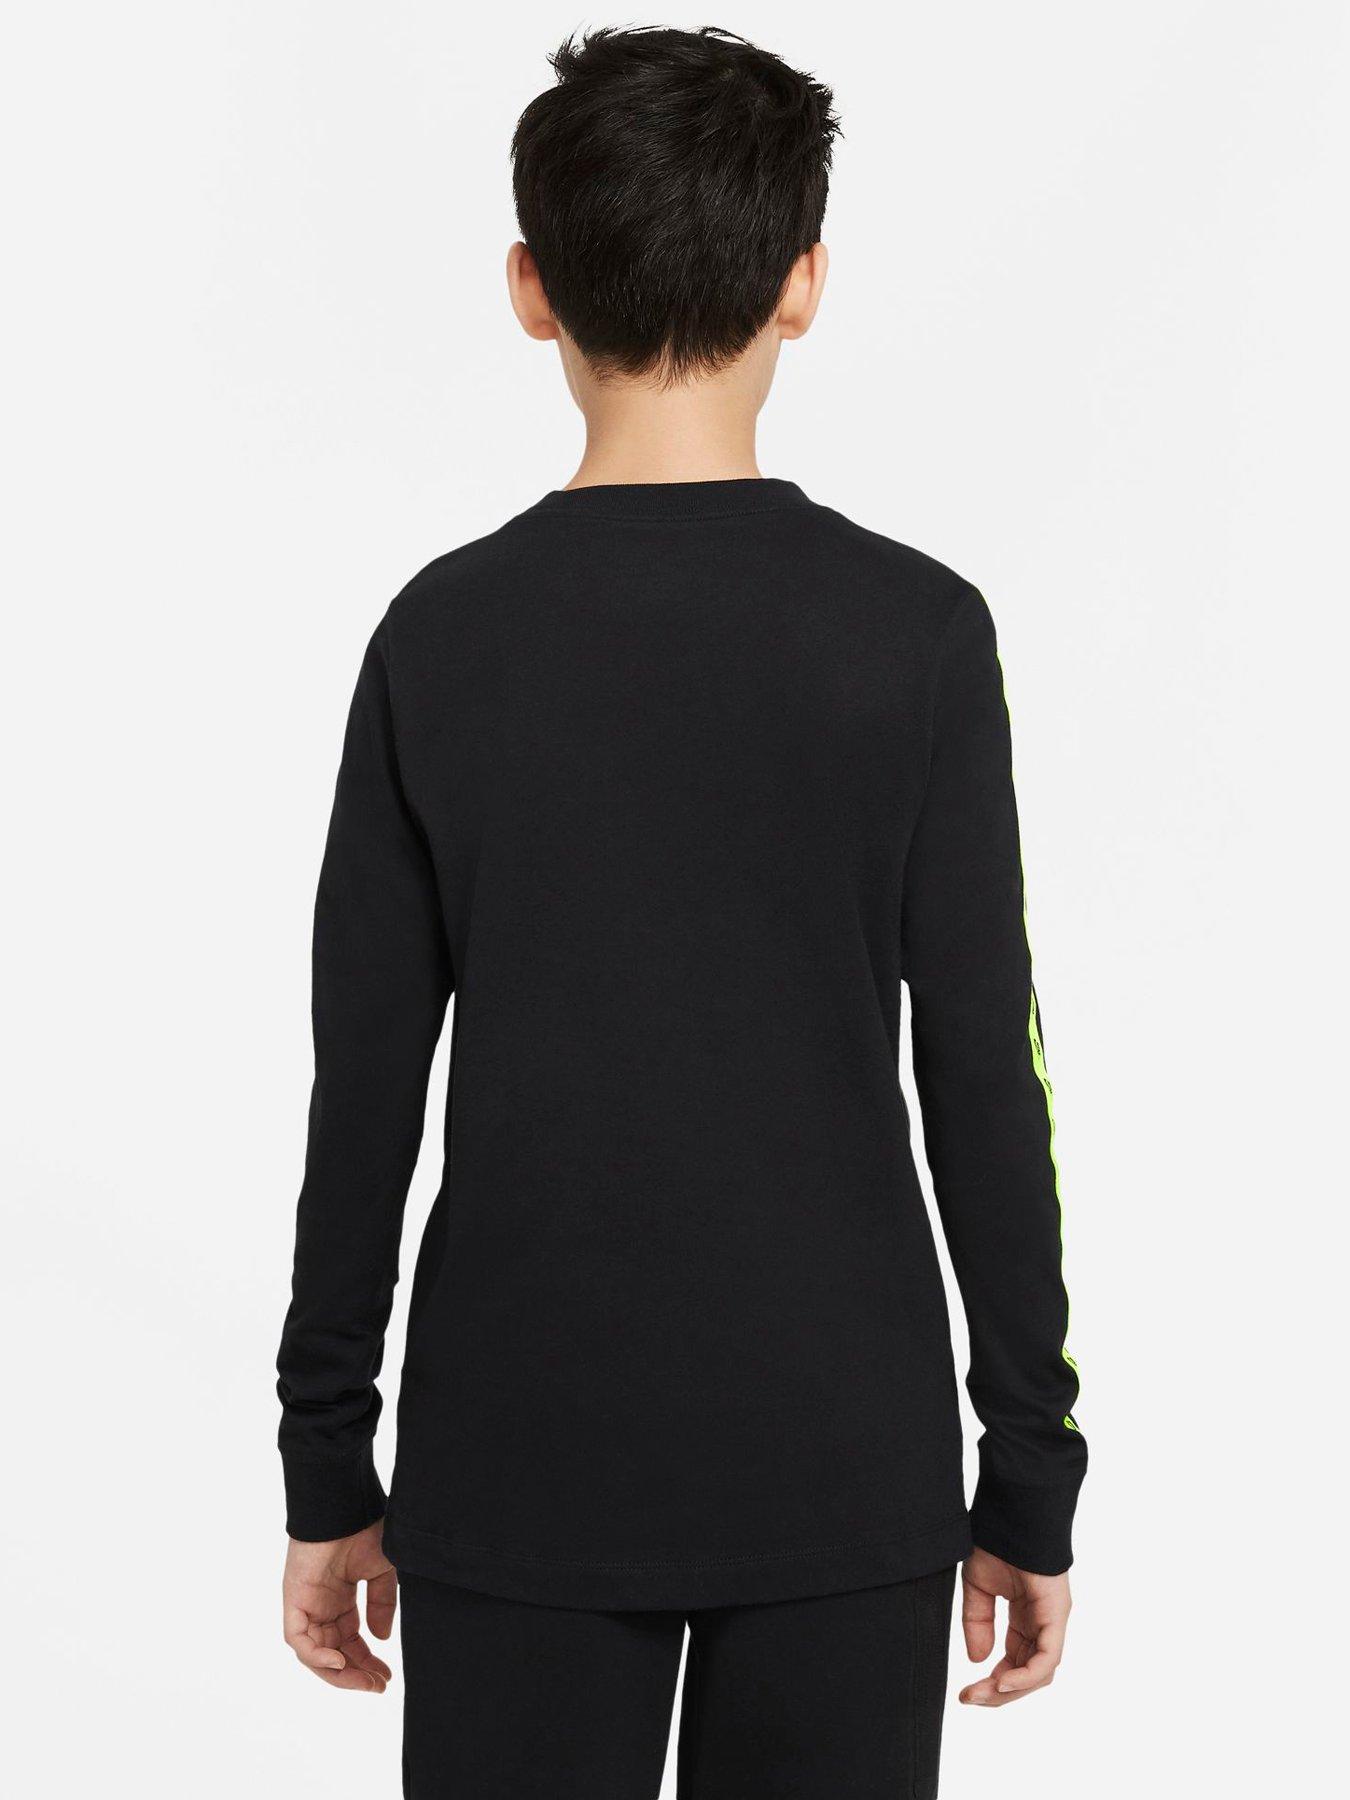 Nike Boys NSW Taped Long Sleeve T-Shirt - Black | very.co.uk